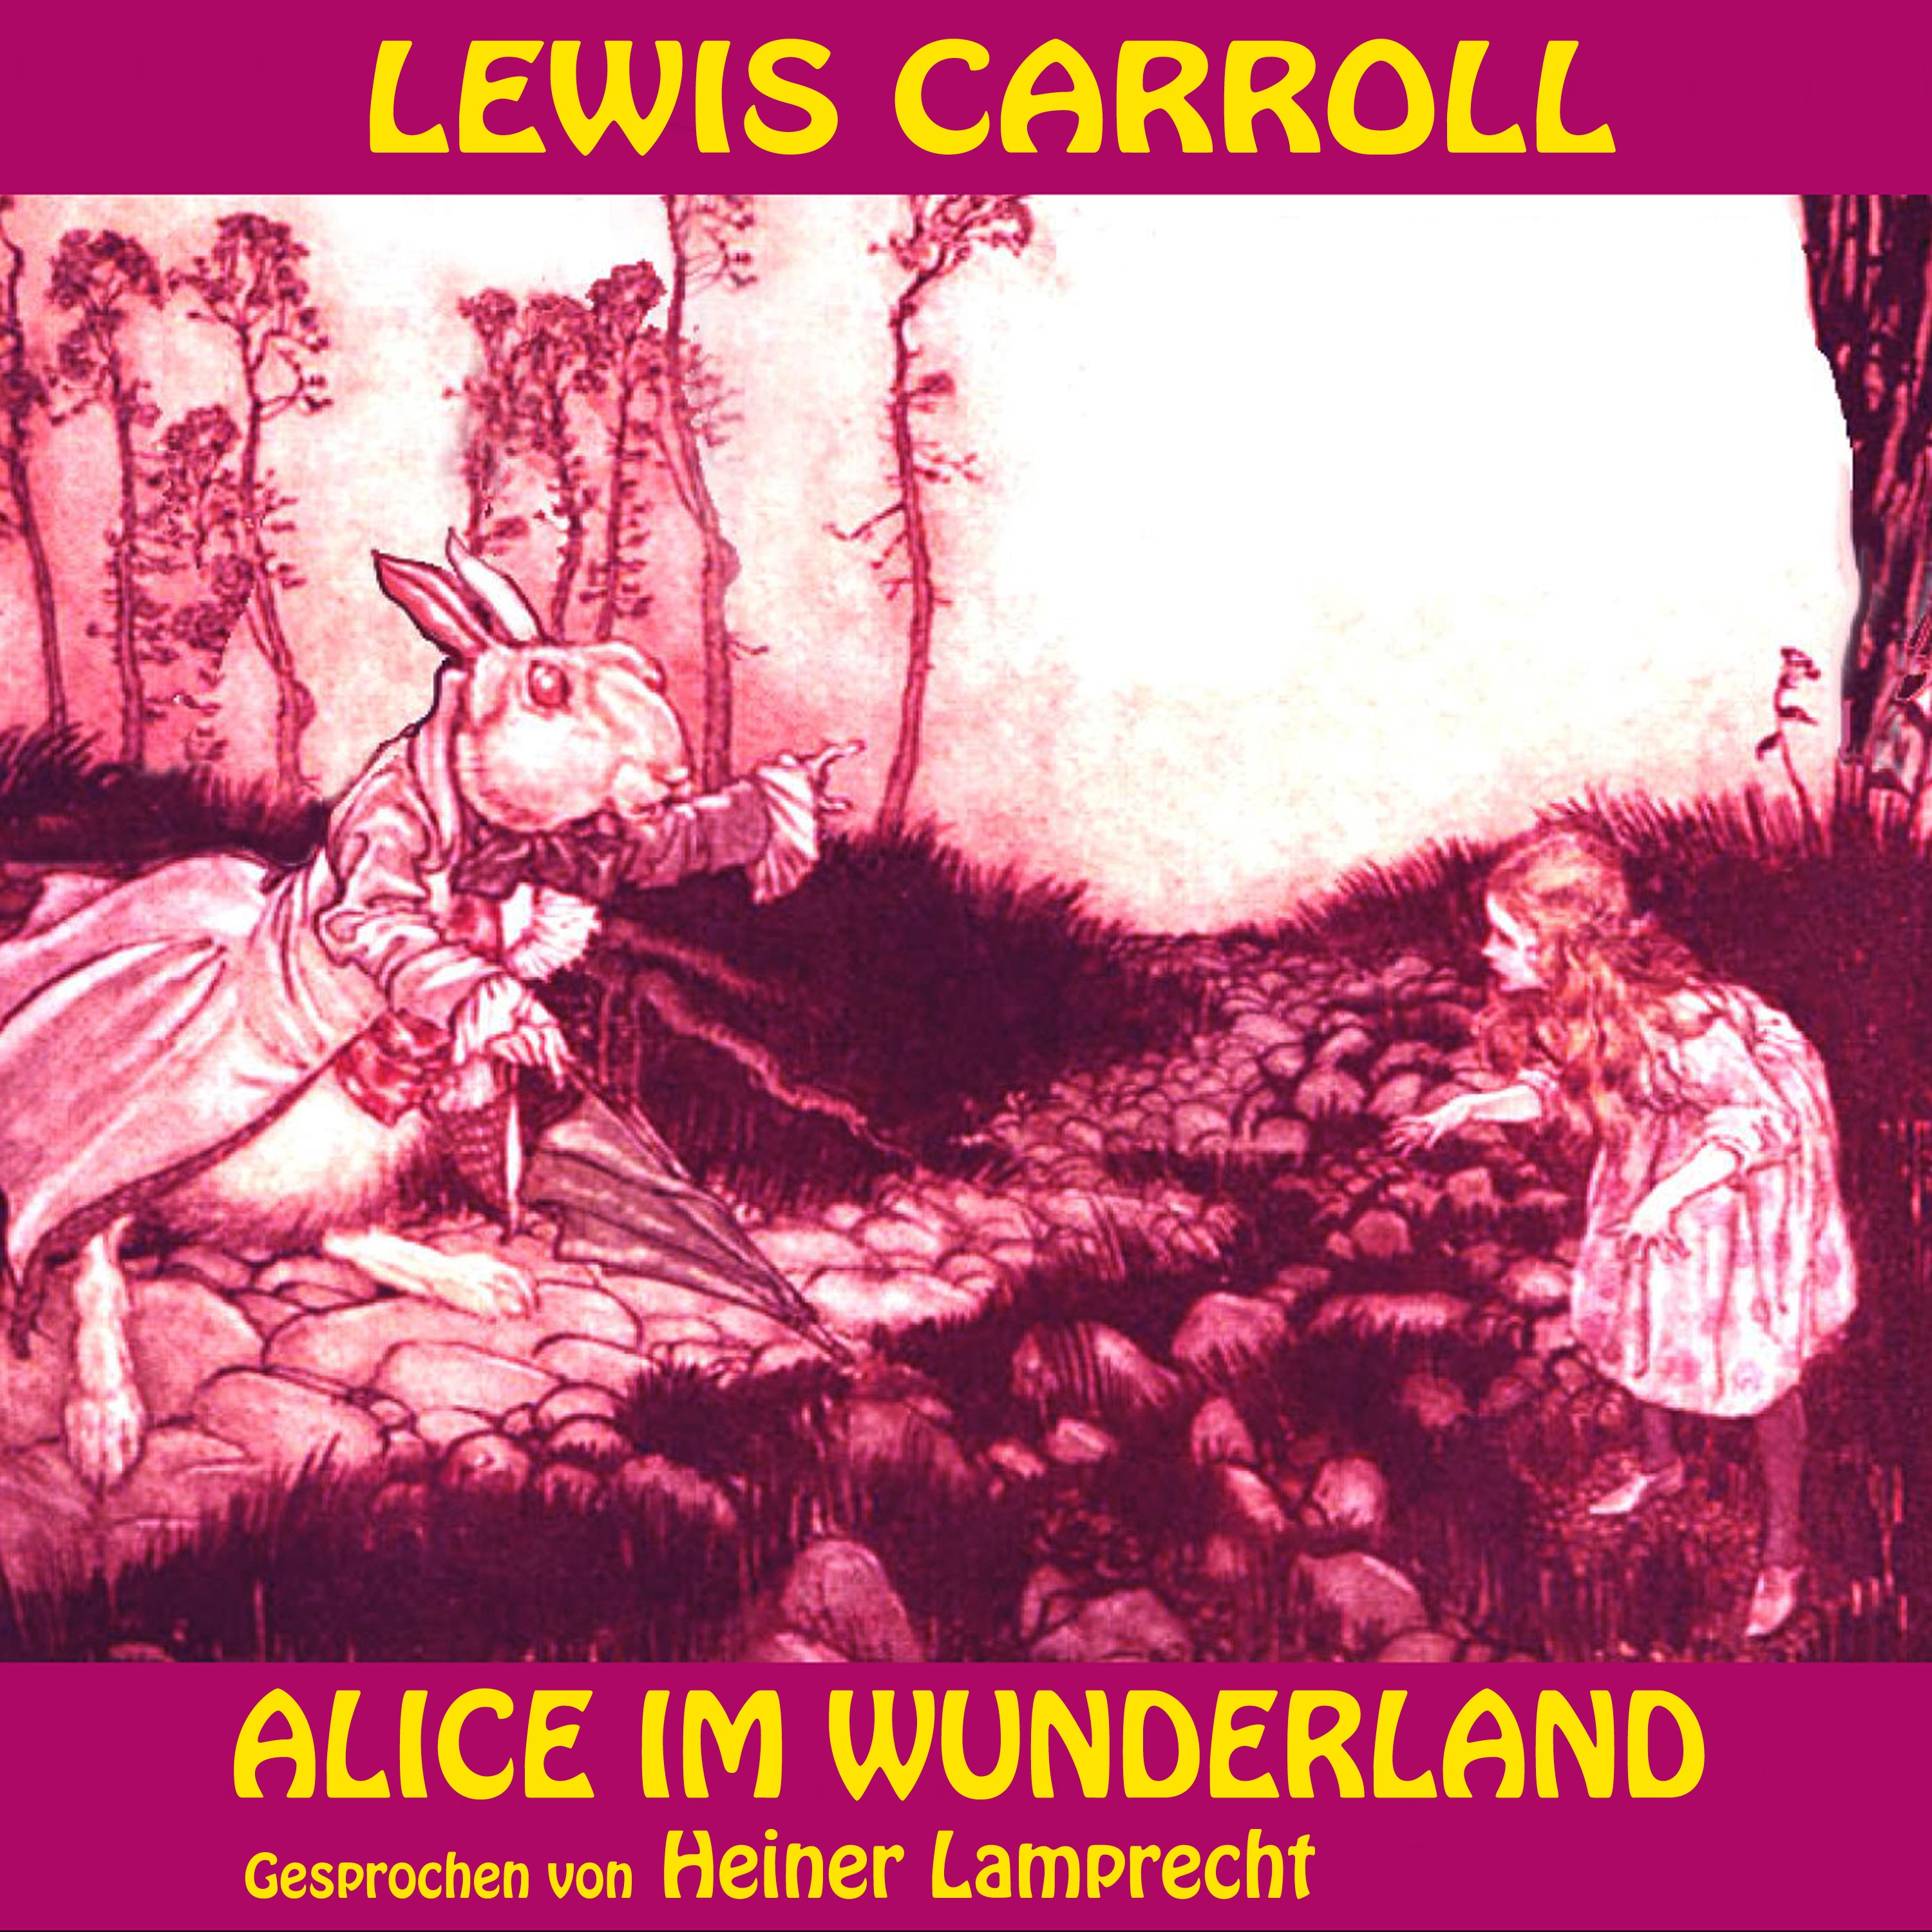 Kapitel 6: Alice im Wunderland (Teil 11)